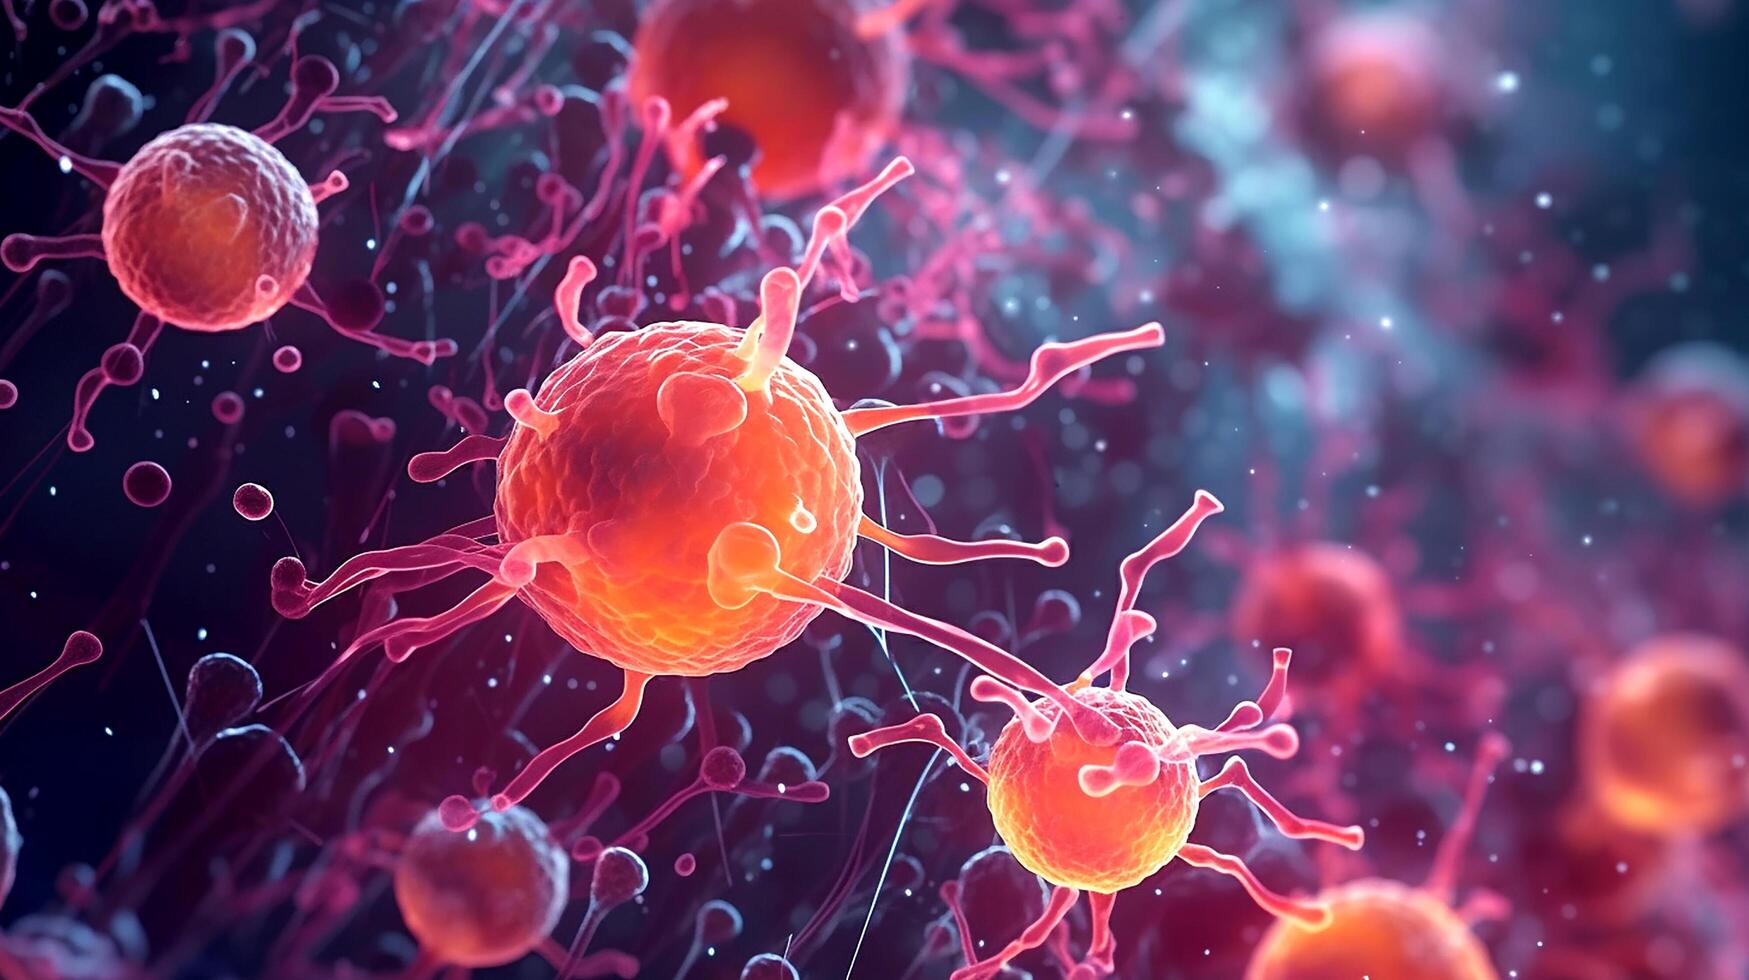 Bacteria, Digital illustration of bacteria or influenza virus, Bacteria cell under microscope, photo